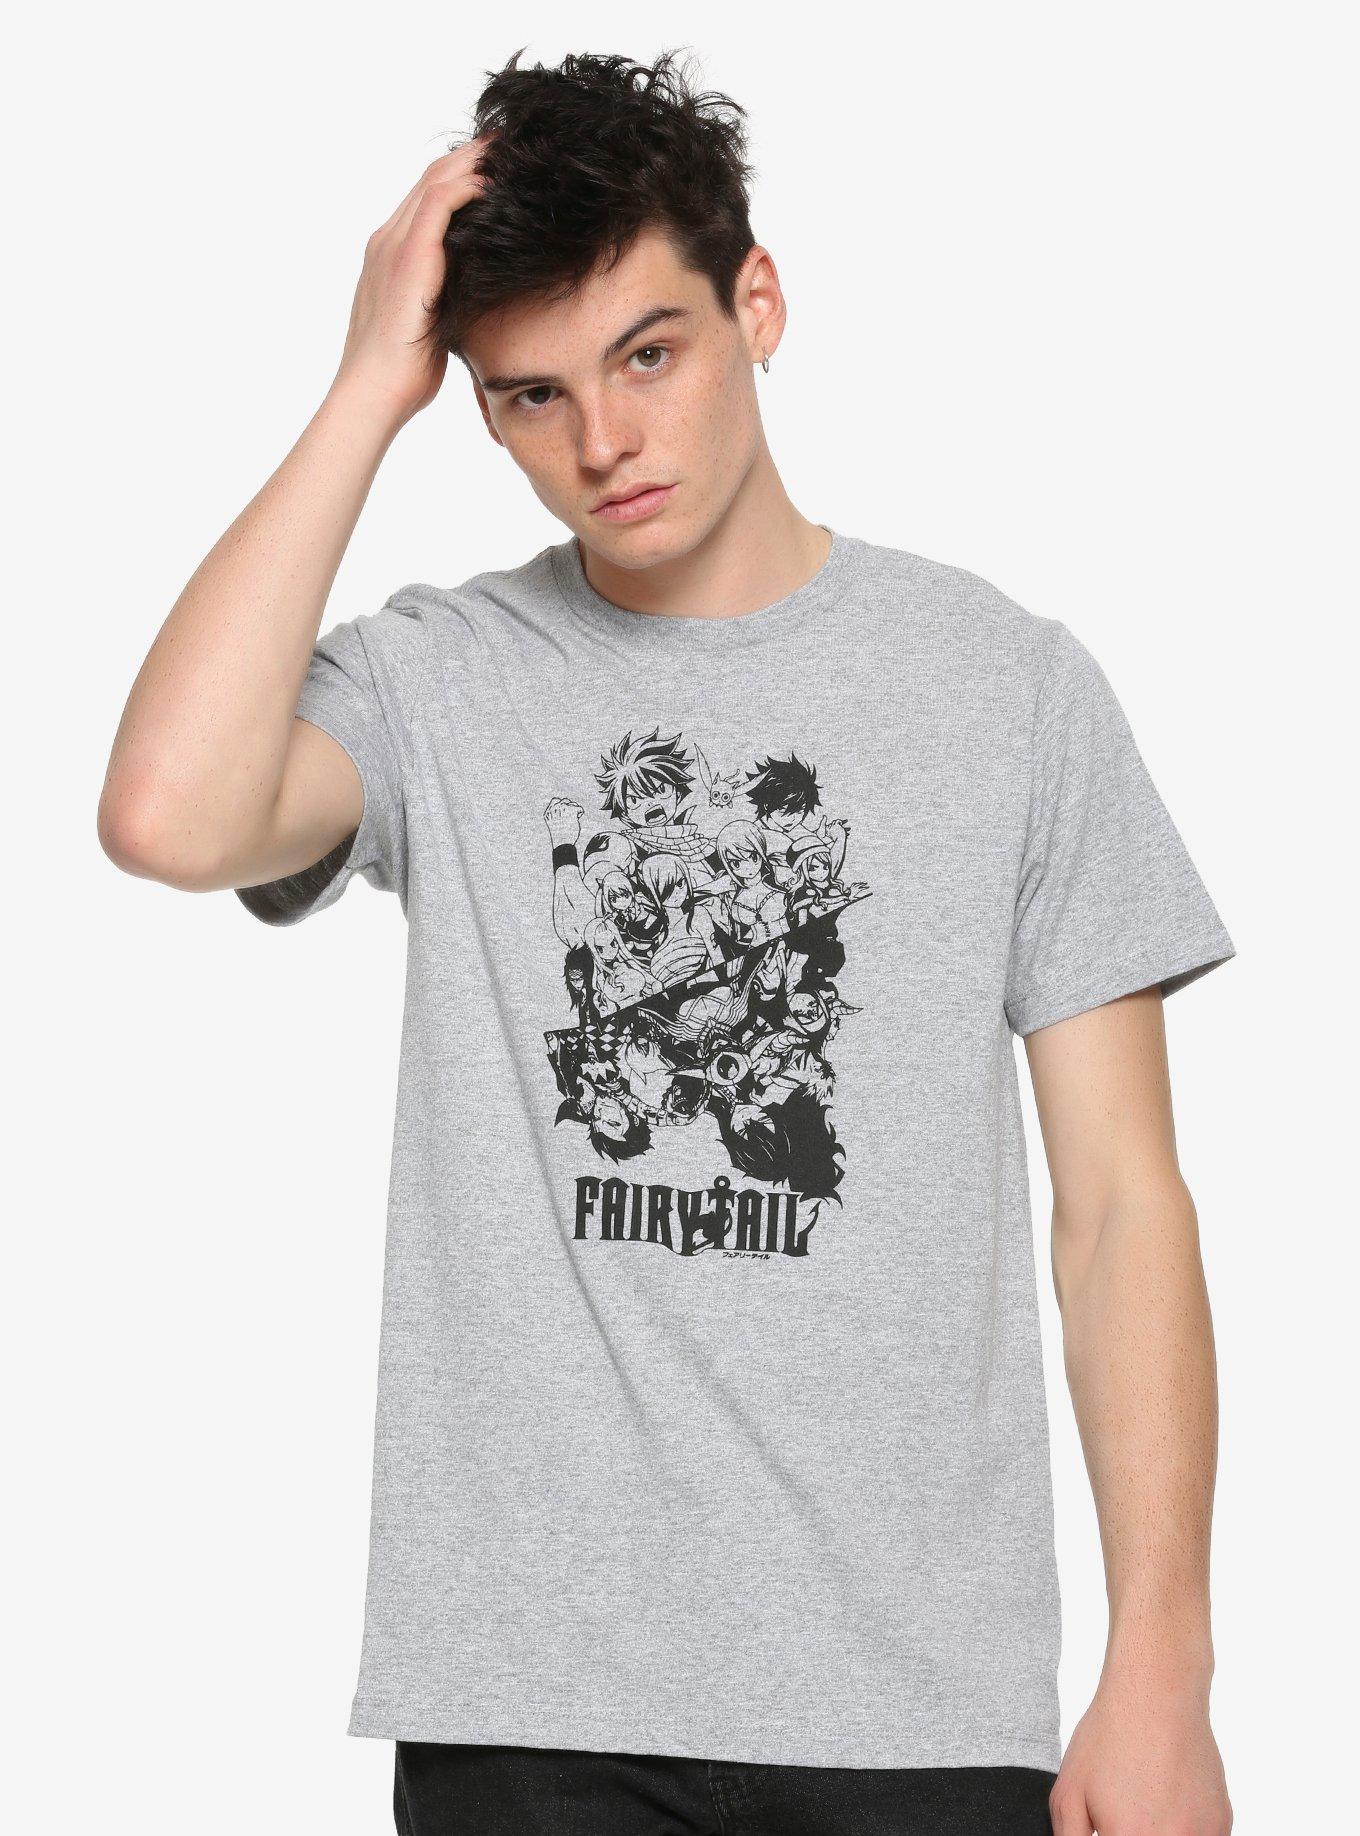 Fairy Tail Group Black & Grey Girls T-Shirt, GREY, alternate